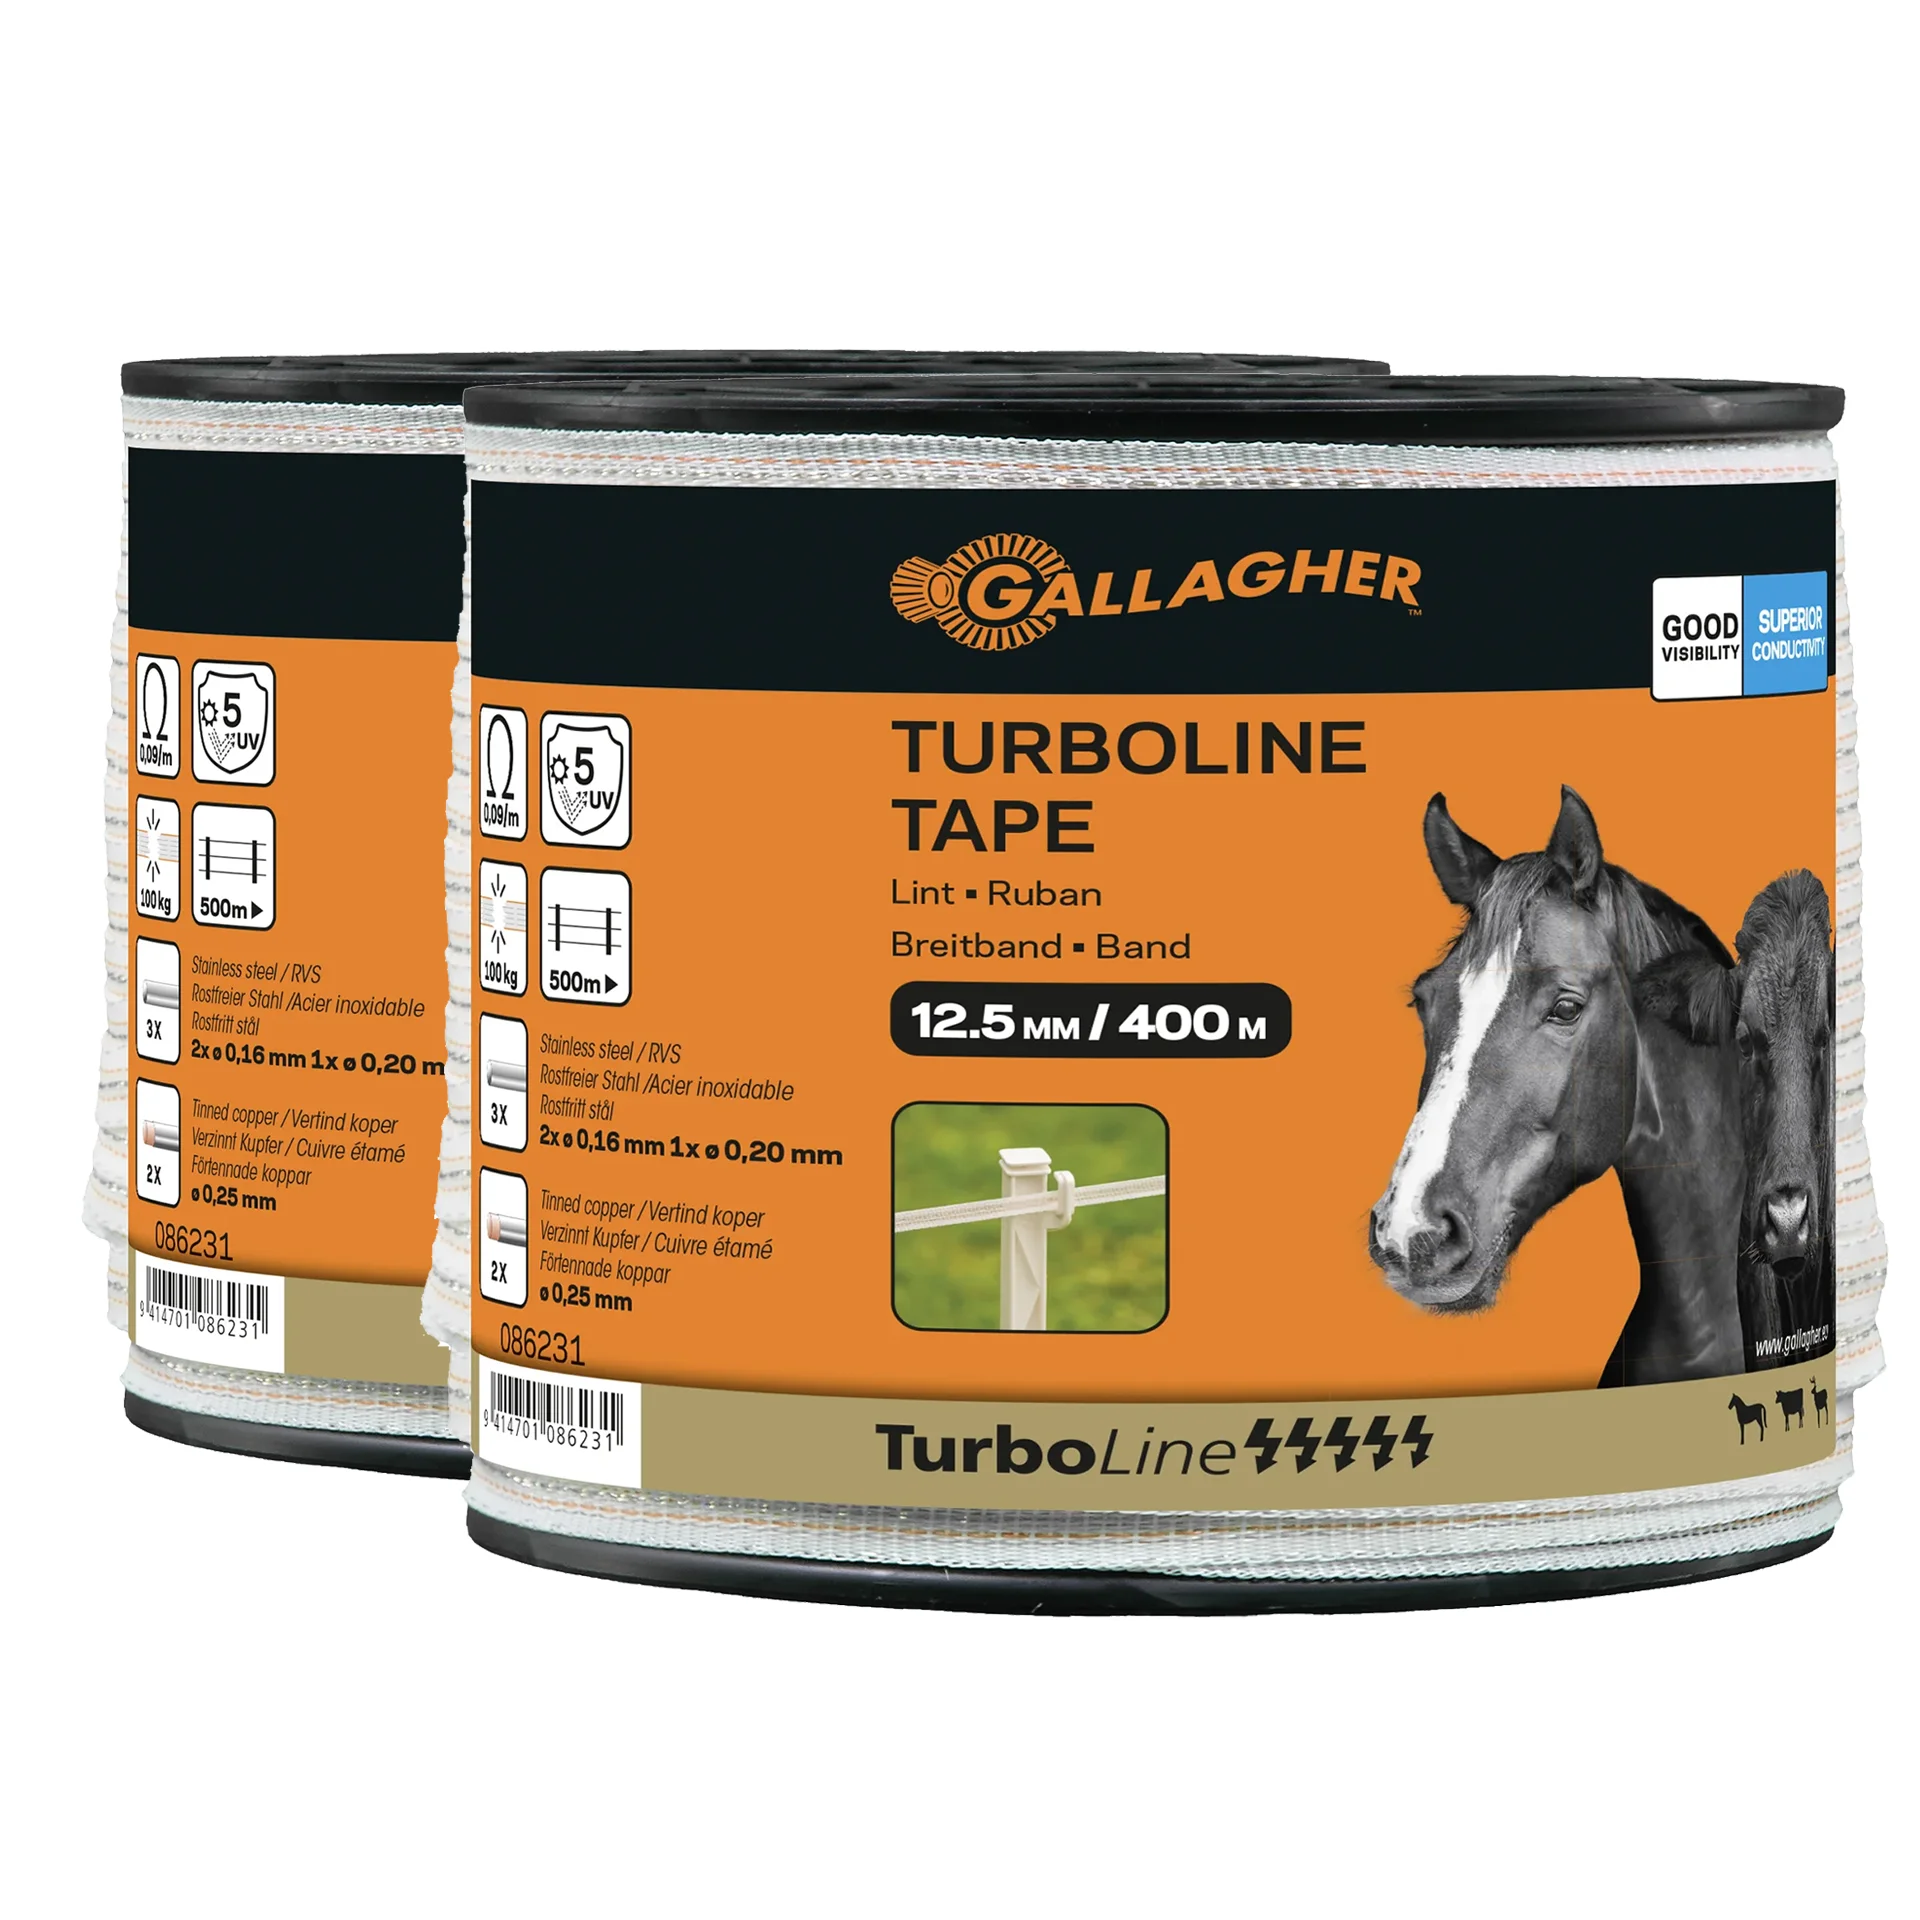 Duopack TurboLine tape 12,5mm white 2x400m